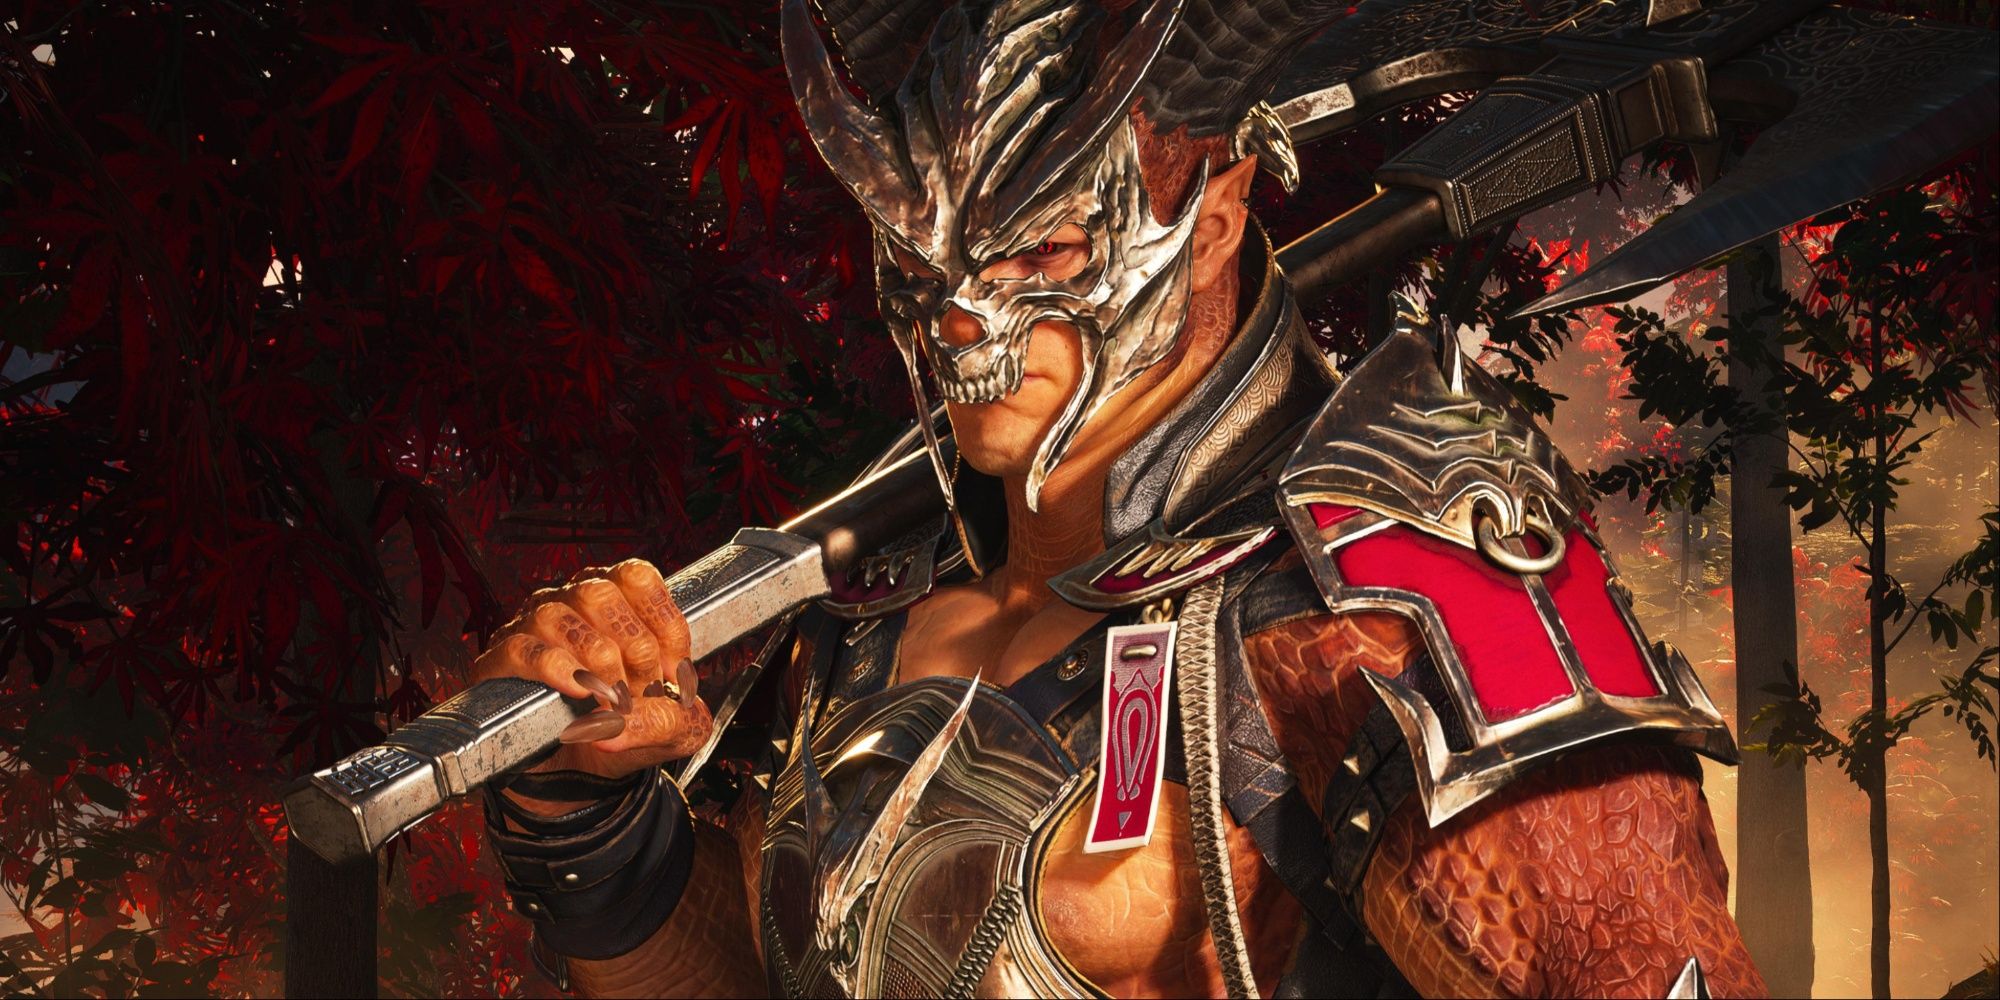 General Shao in Mortal Kombat 1 photo mode